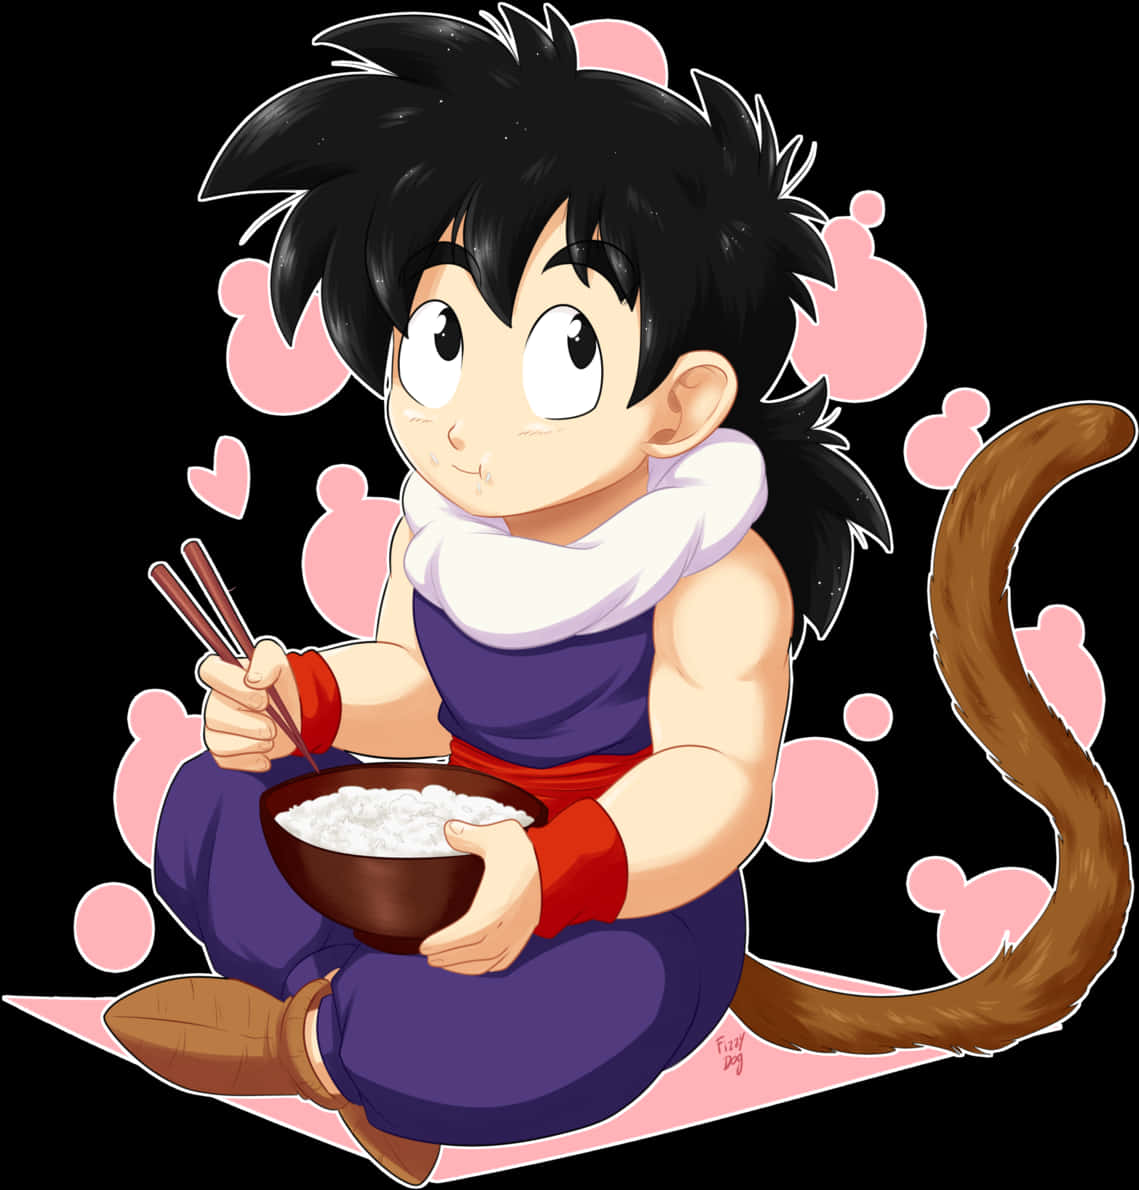 A Cartoon Of A Boy Eating Rice